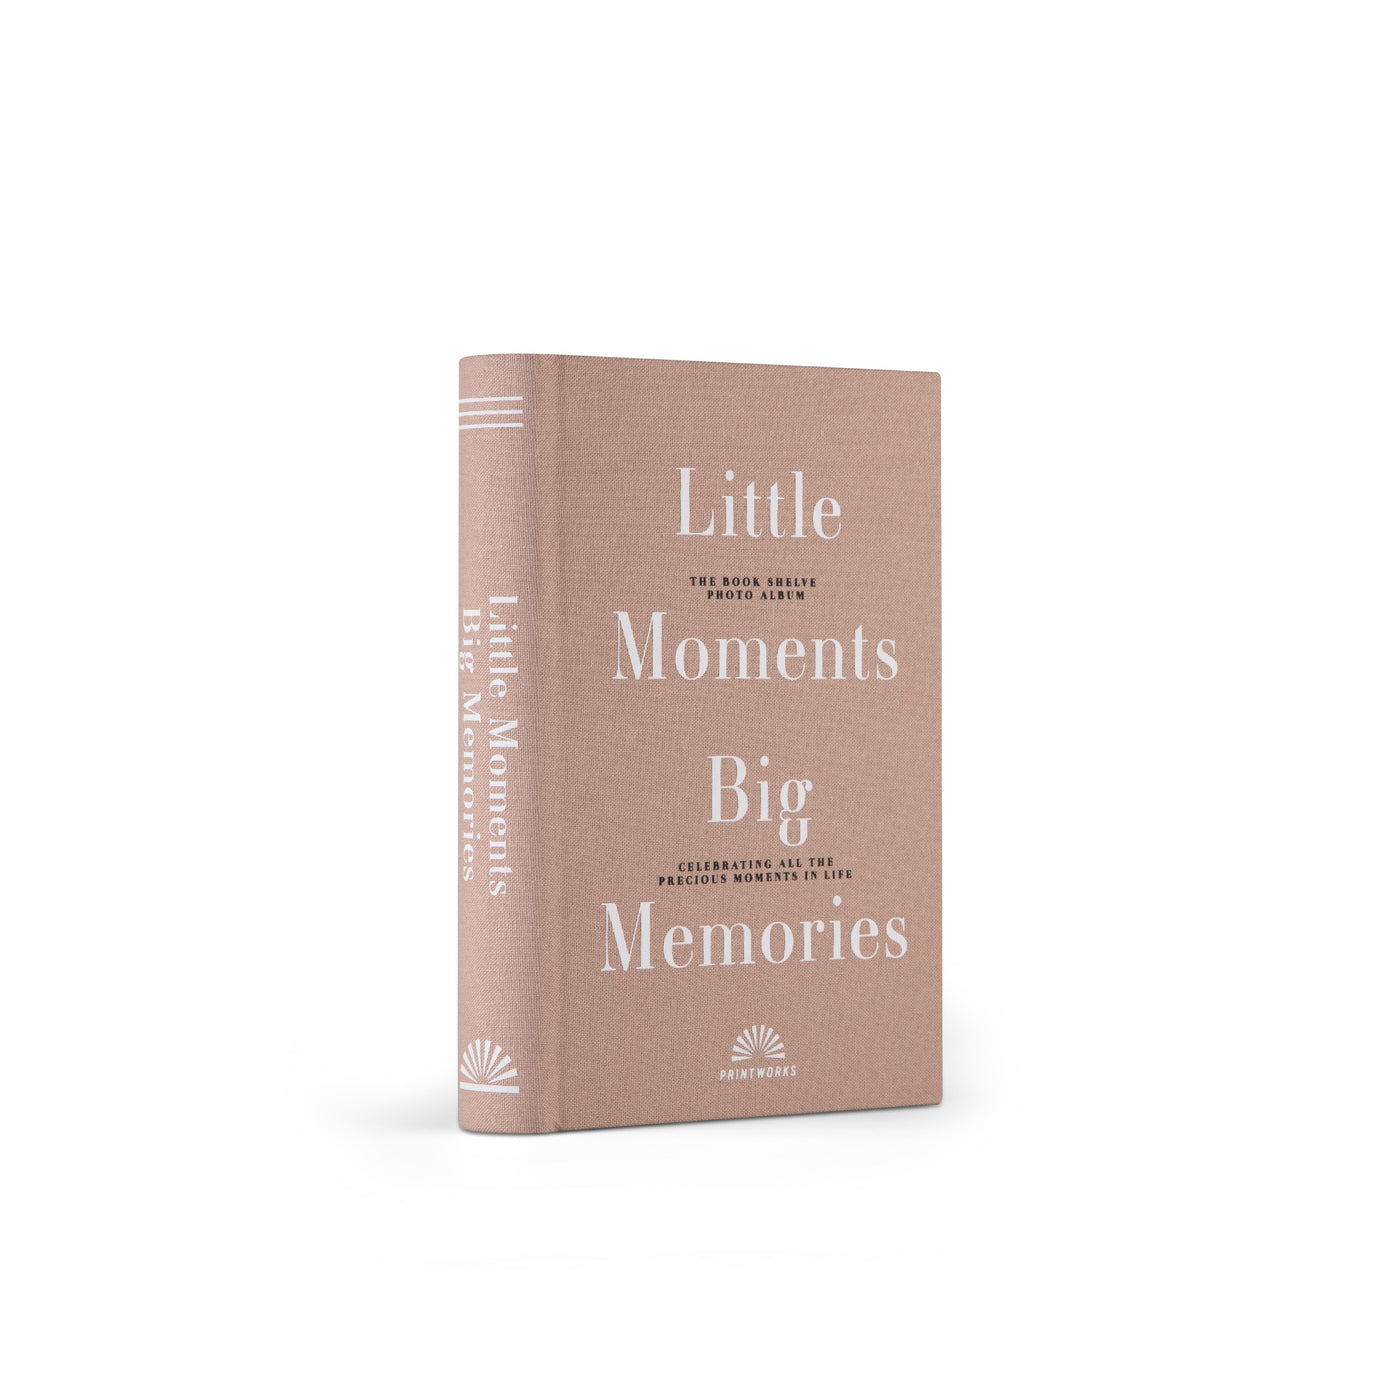 Photo Album: Little Moments Big Memories